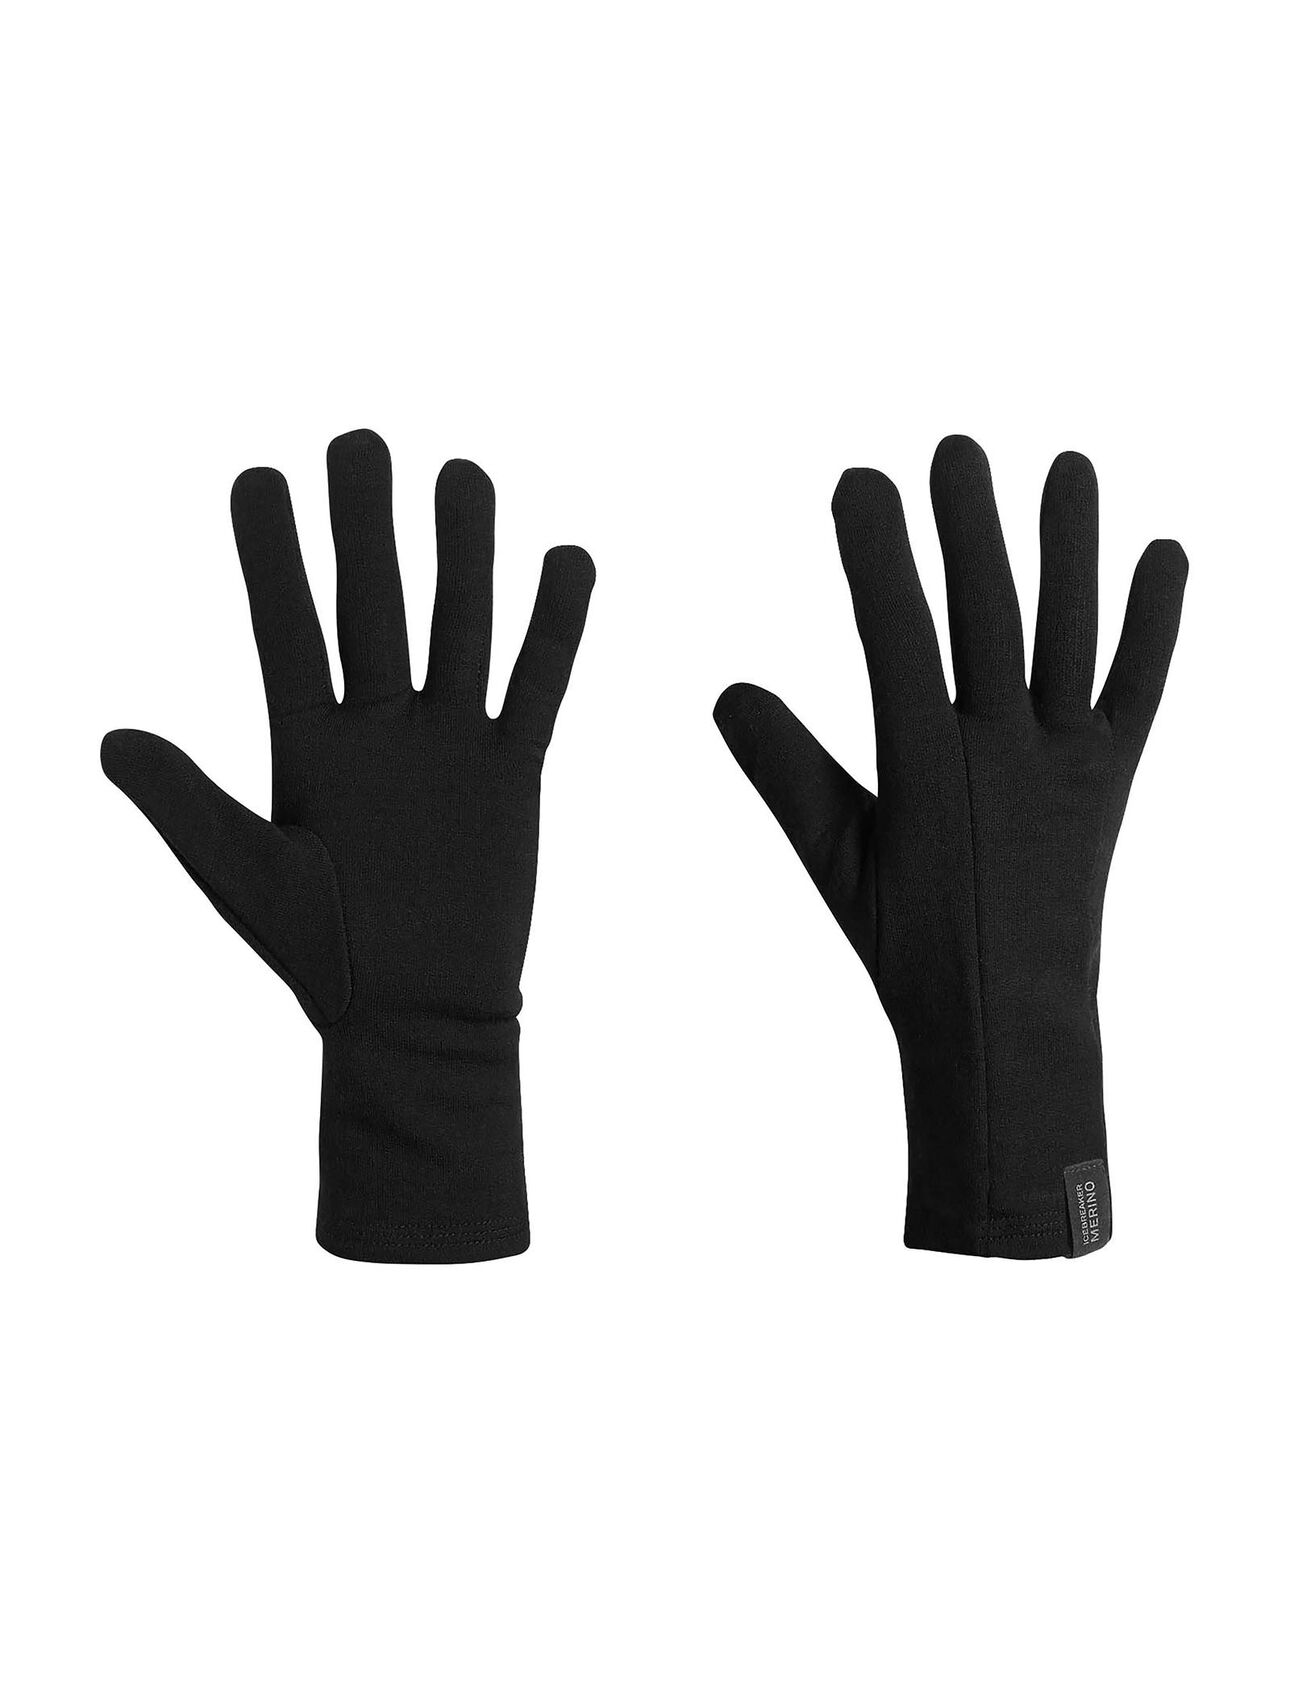 Apex Glove Liners en mérinos